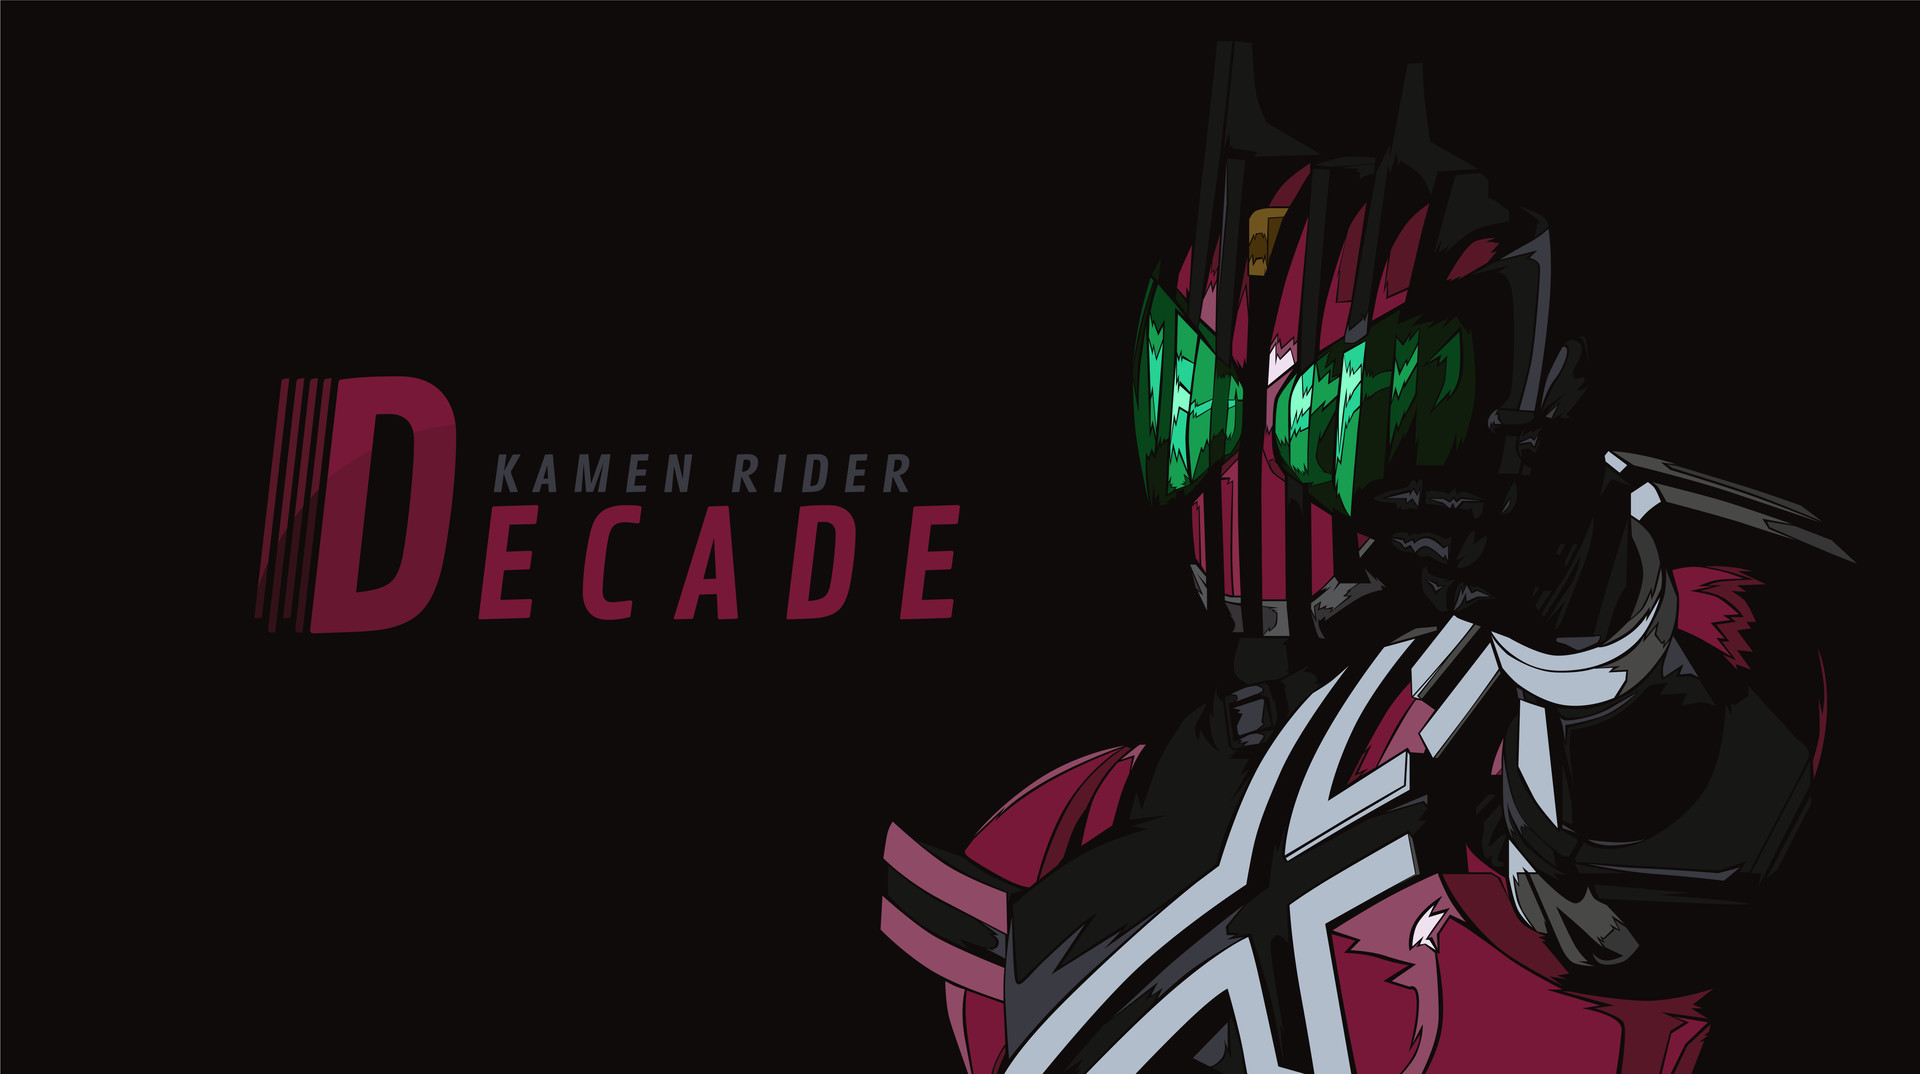 Kamen Rider Decade Wallpaper Hd - HD Wallpaper 